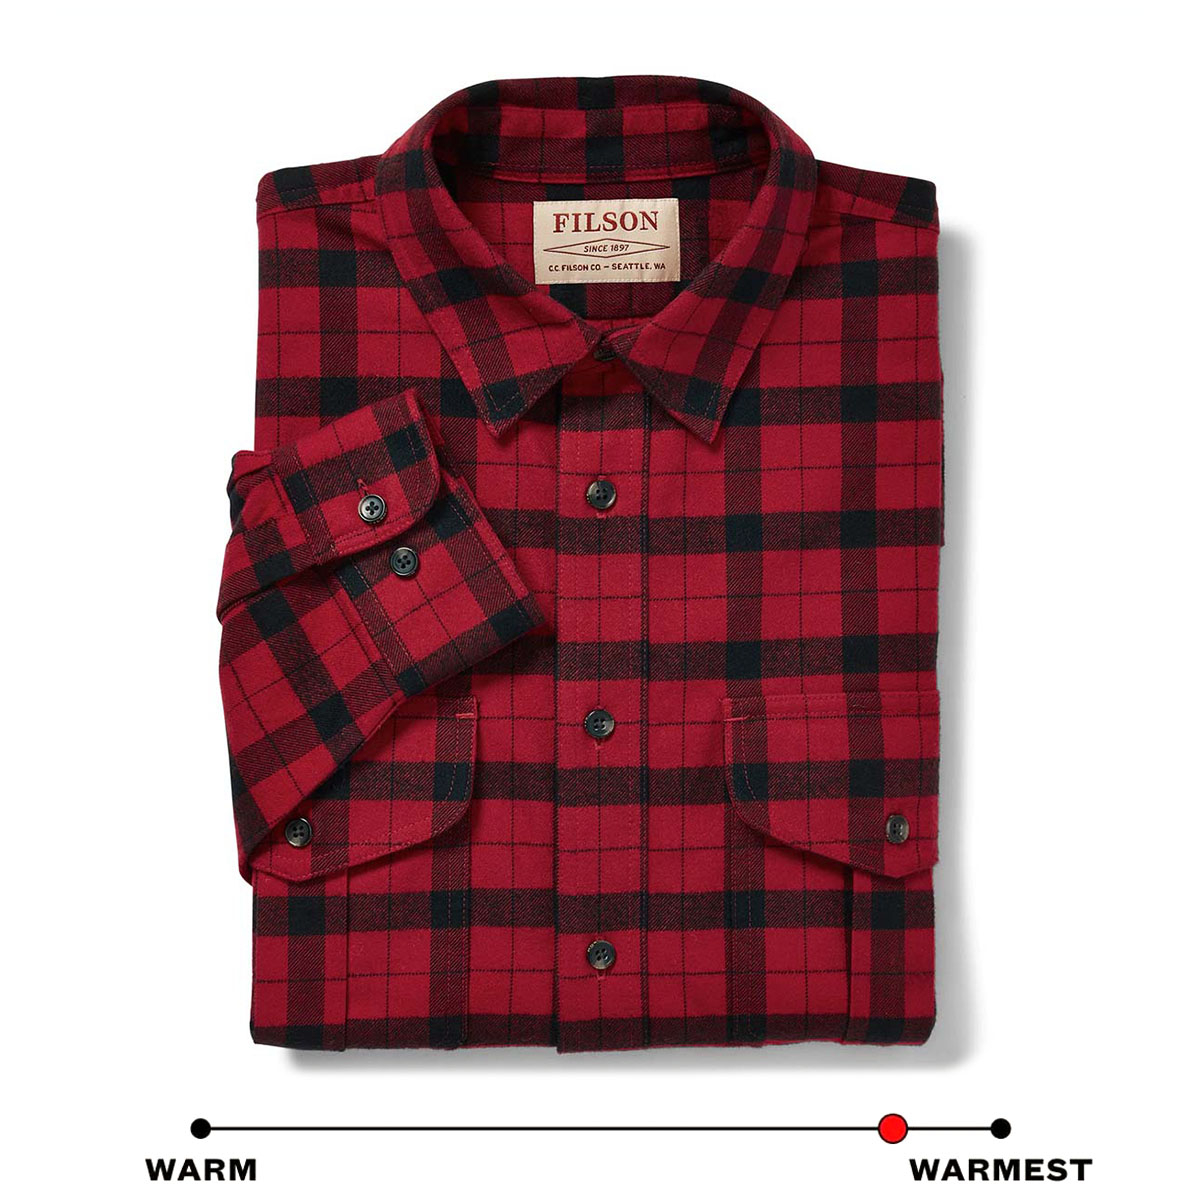 Filson Alaskan Guide Shirt Red Black, provides unfailing comfort and durability, season after season